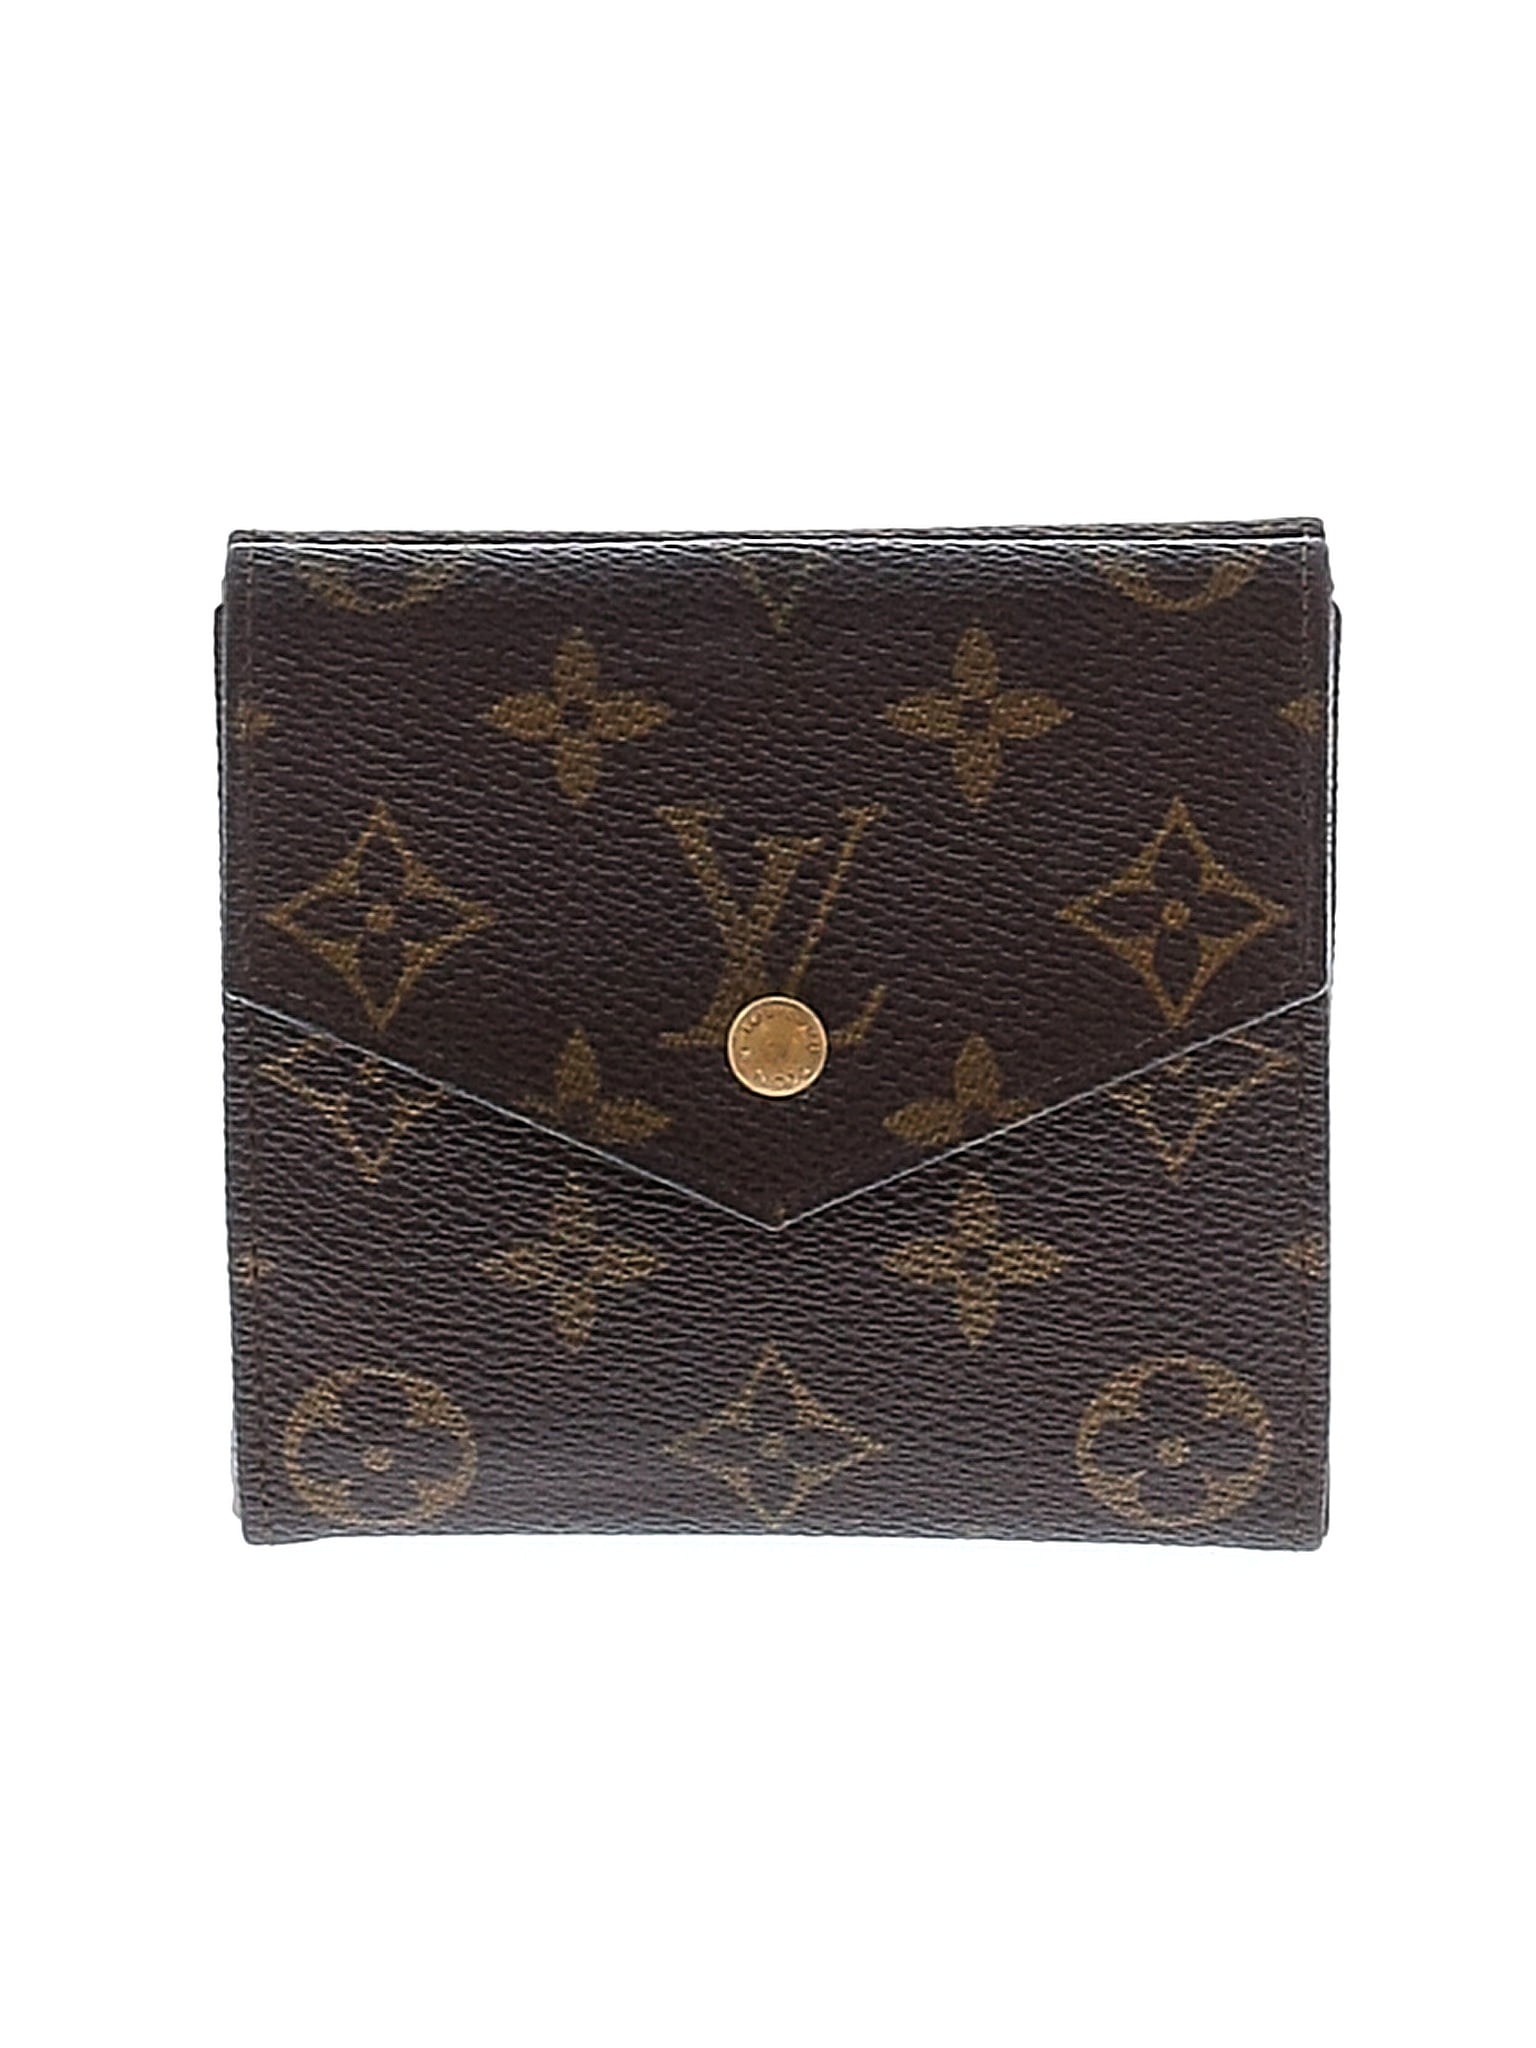 Louis Vuitton Brown Monogram Porte-Monnaie Billet Wallet One Size - 53% off